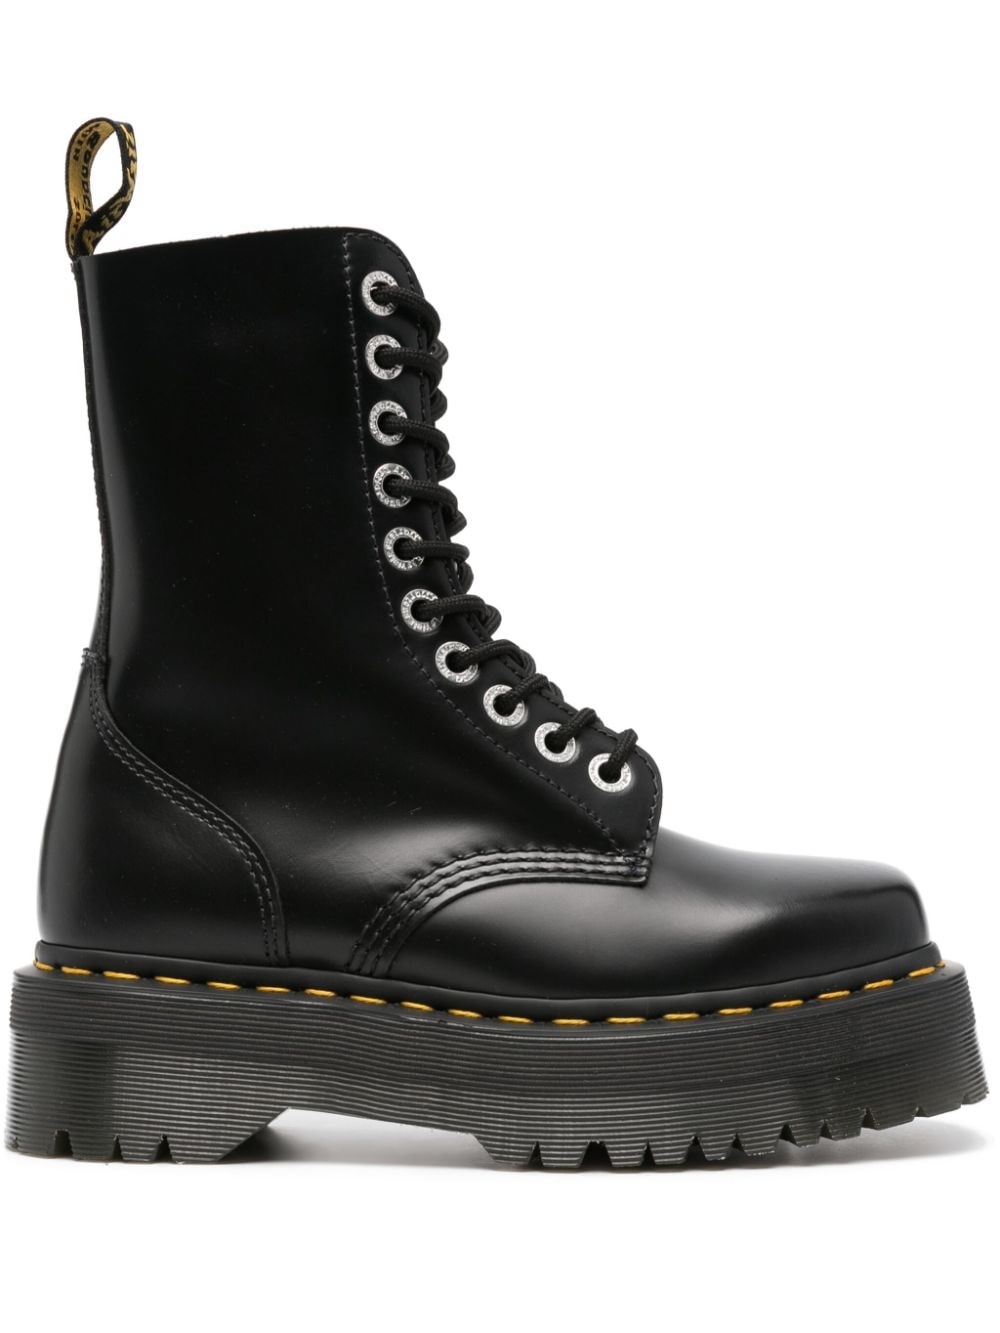 1490 Quad leather boots - 1